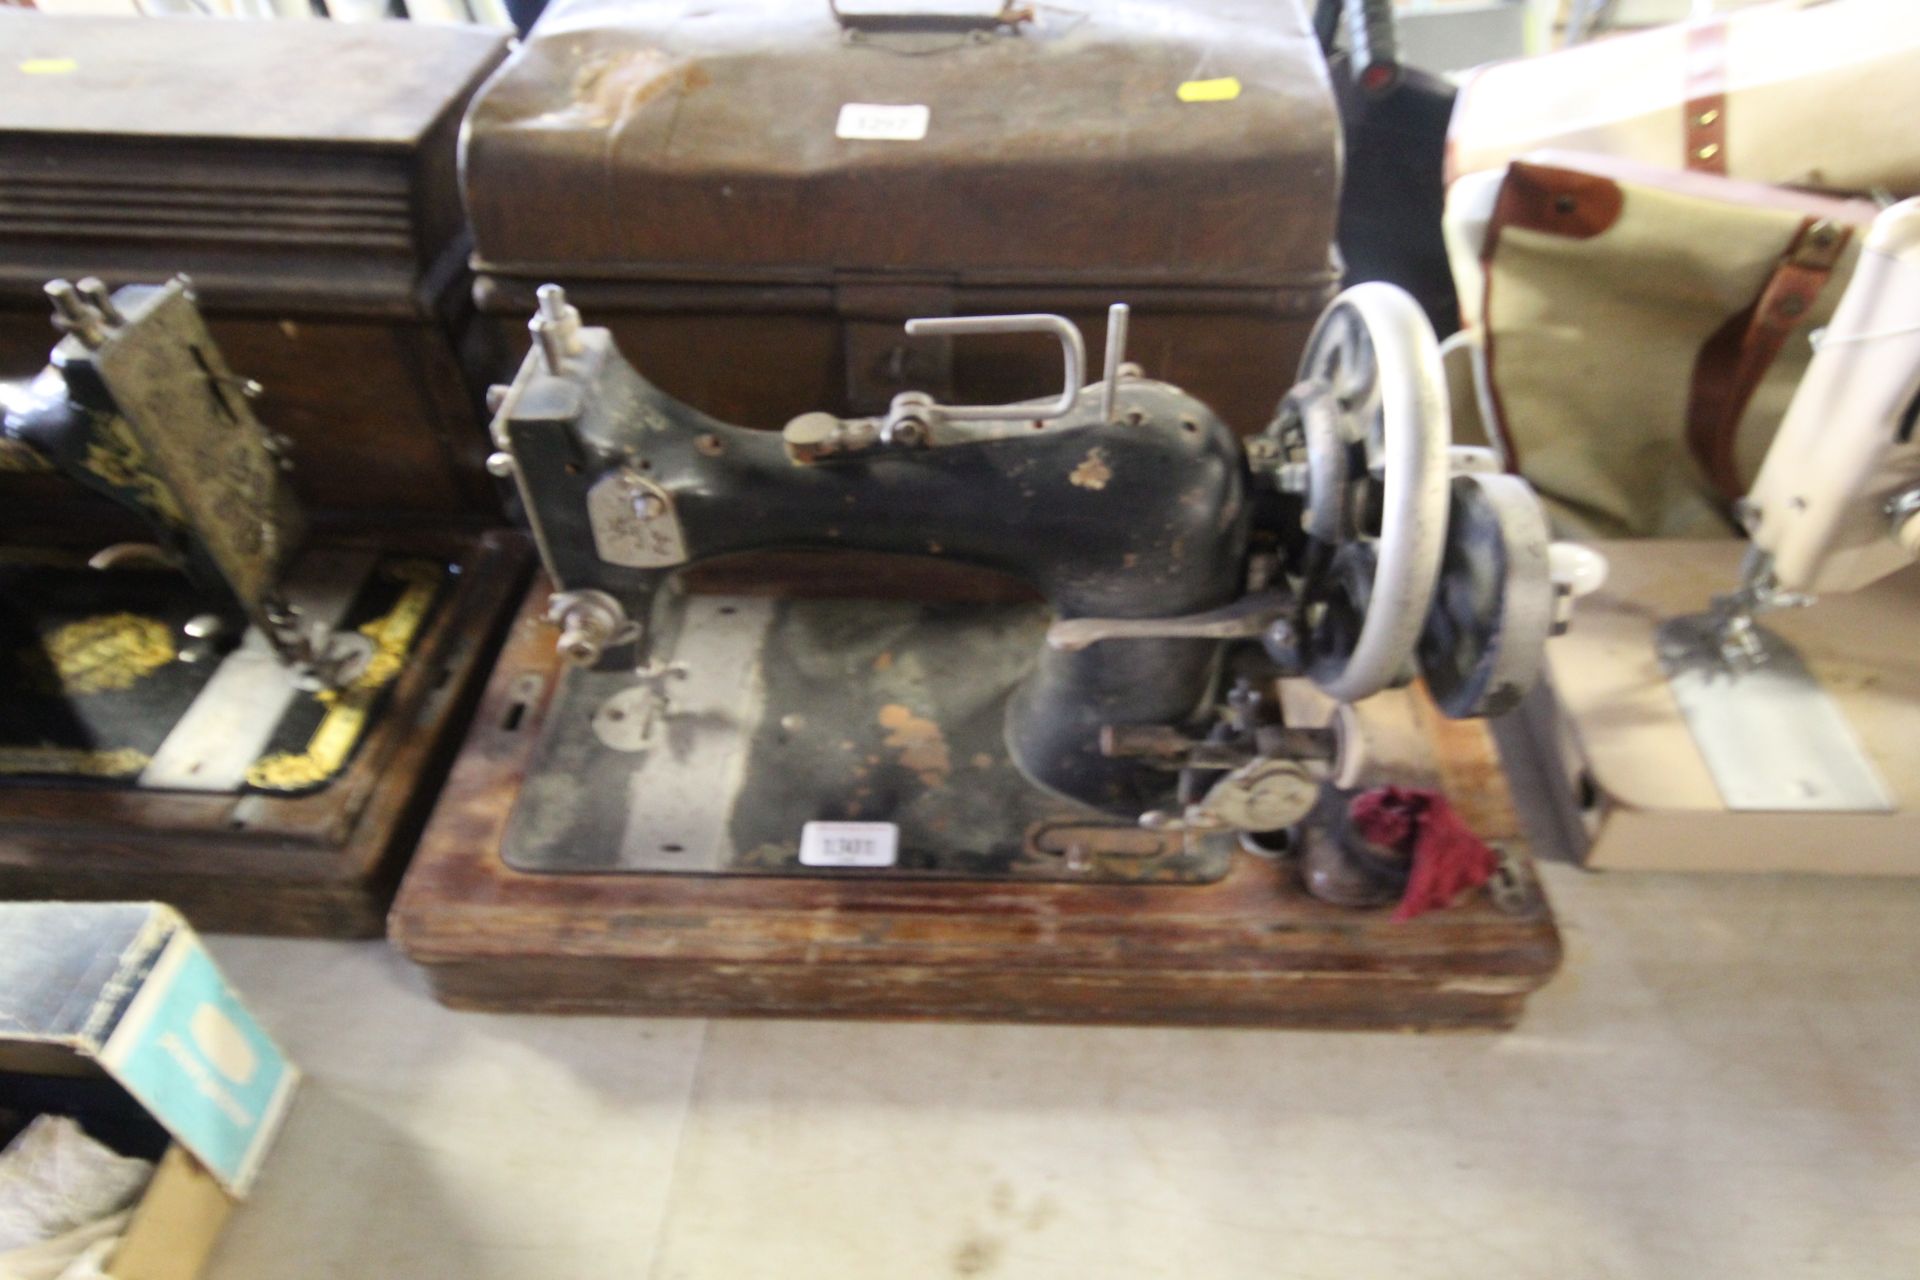 A hand sewing machine